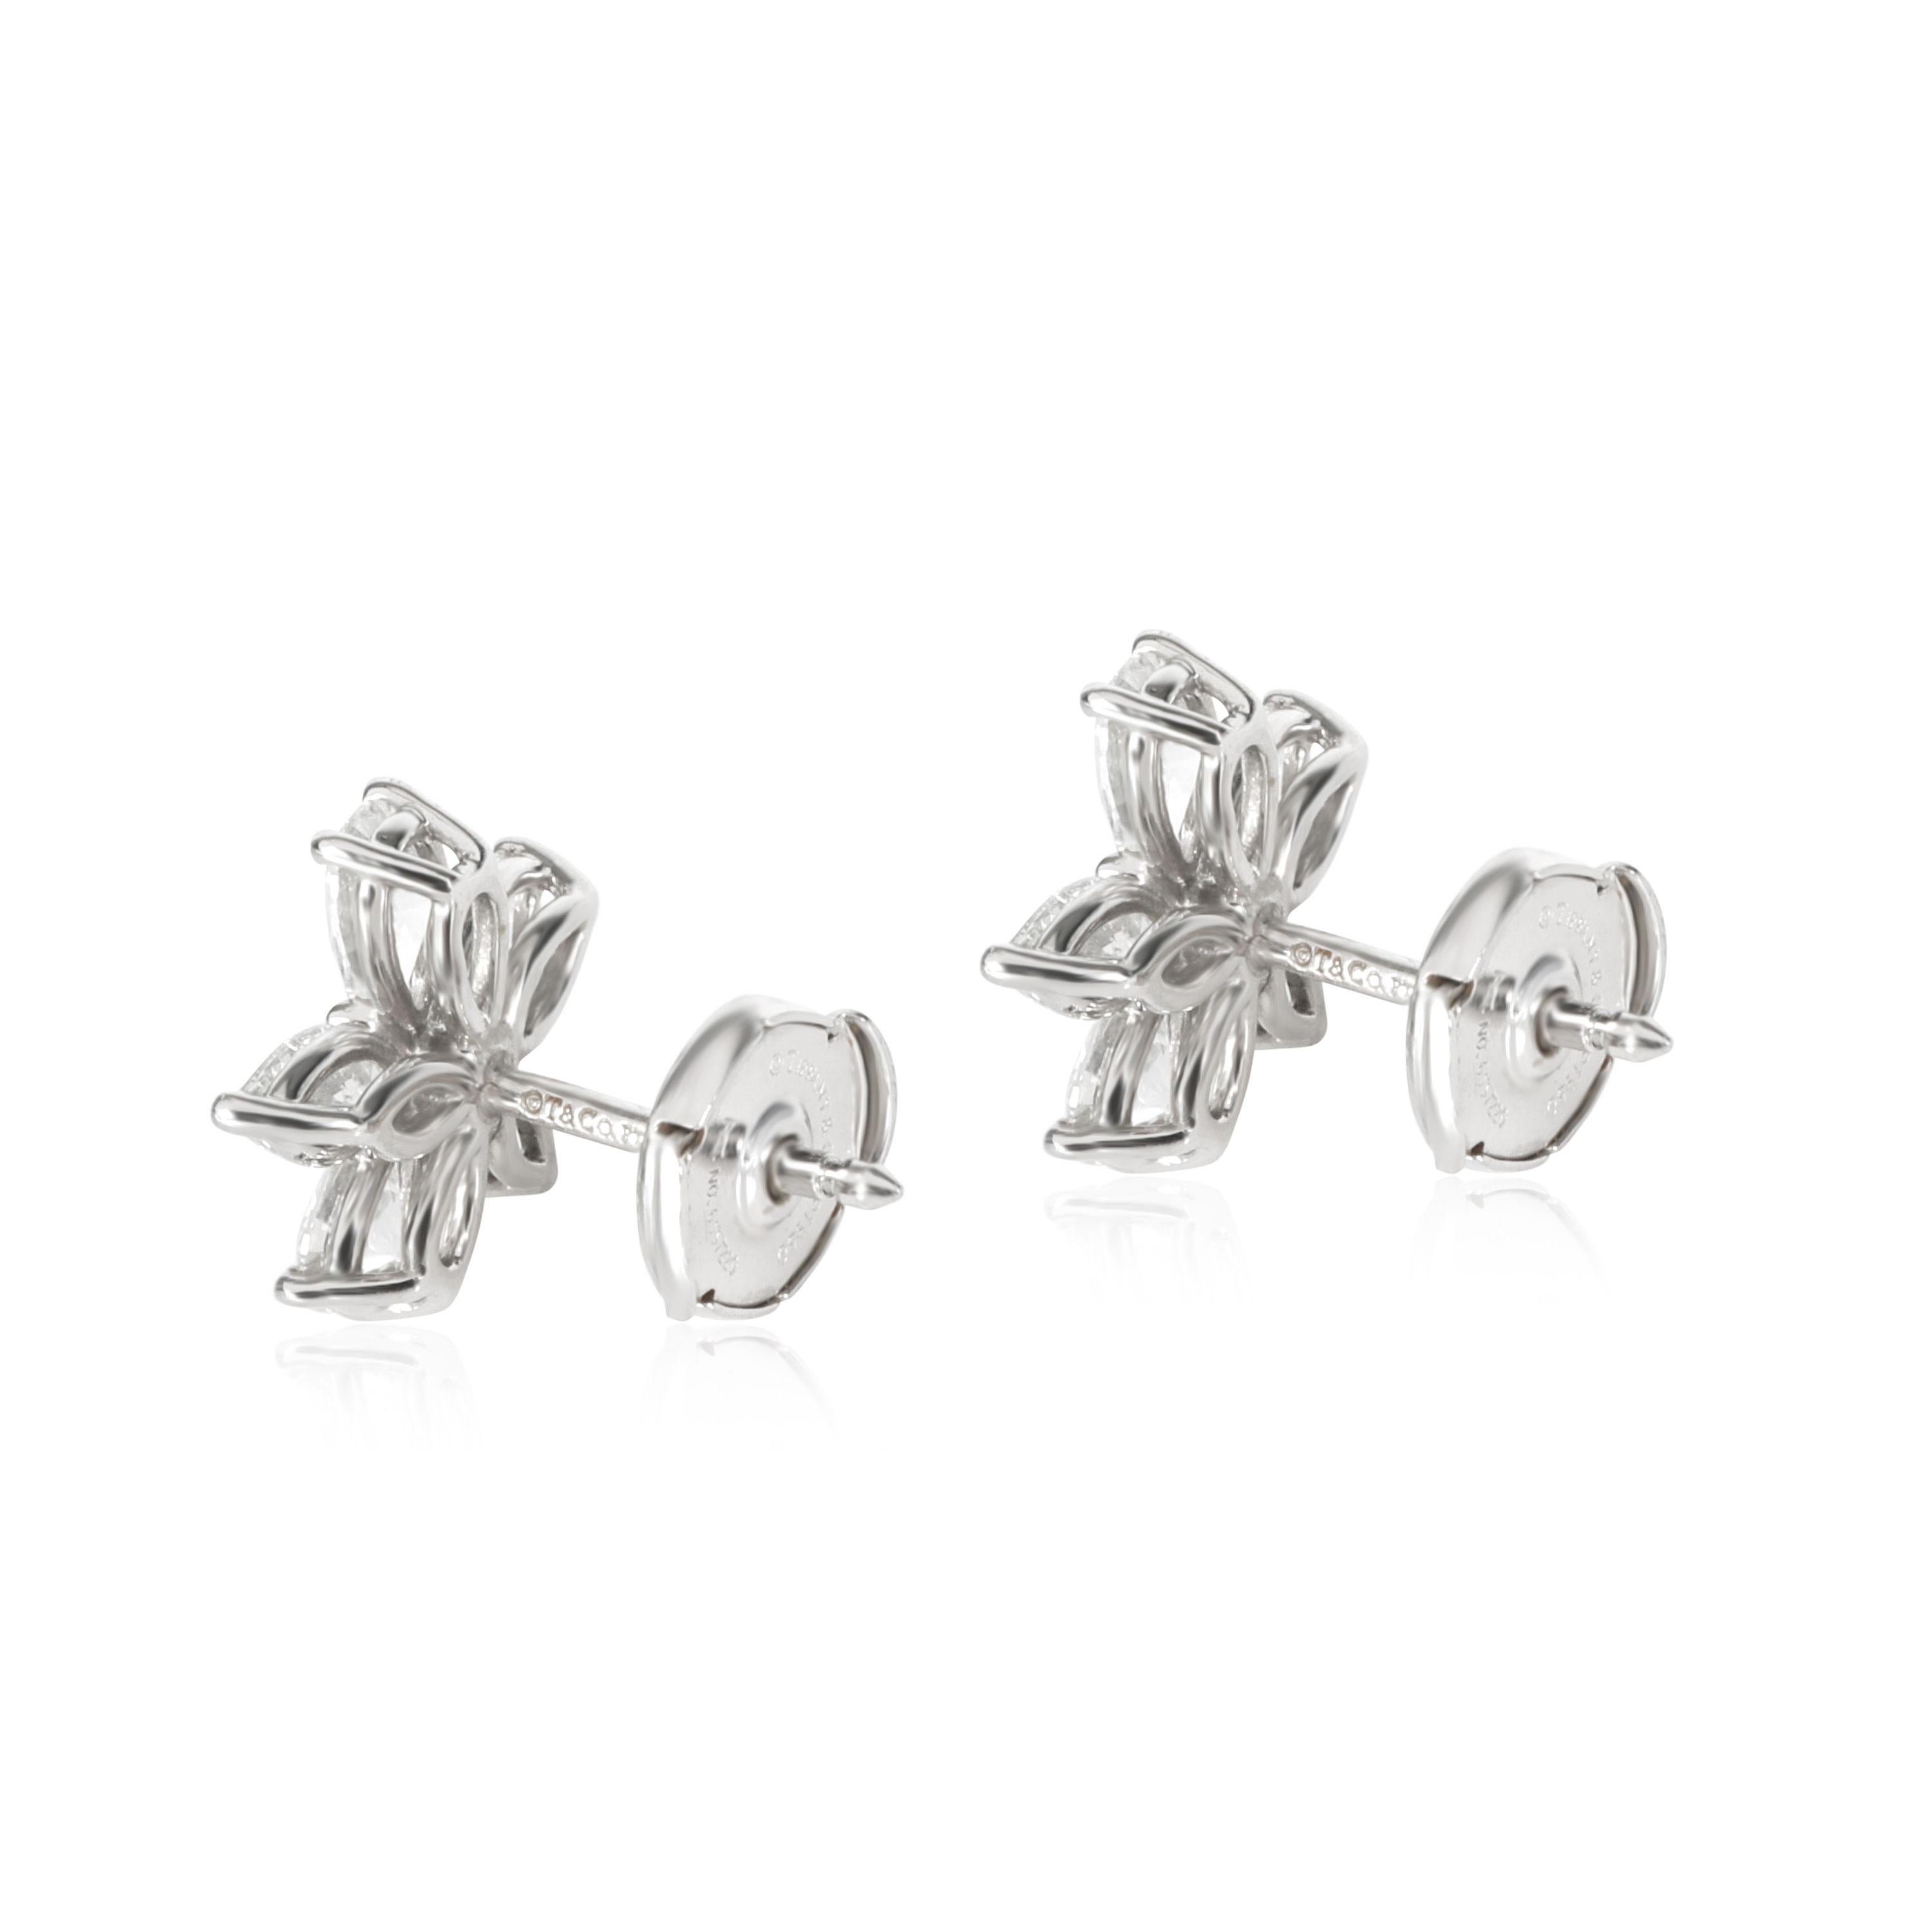 Mixed Cut Tiffany & Co. Victoria Diamond Earring in Platinum 1.77 Carat